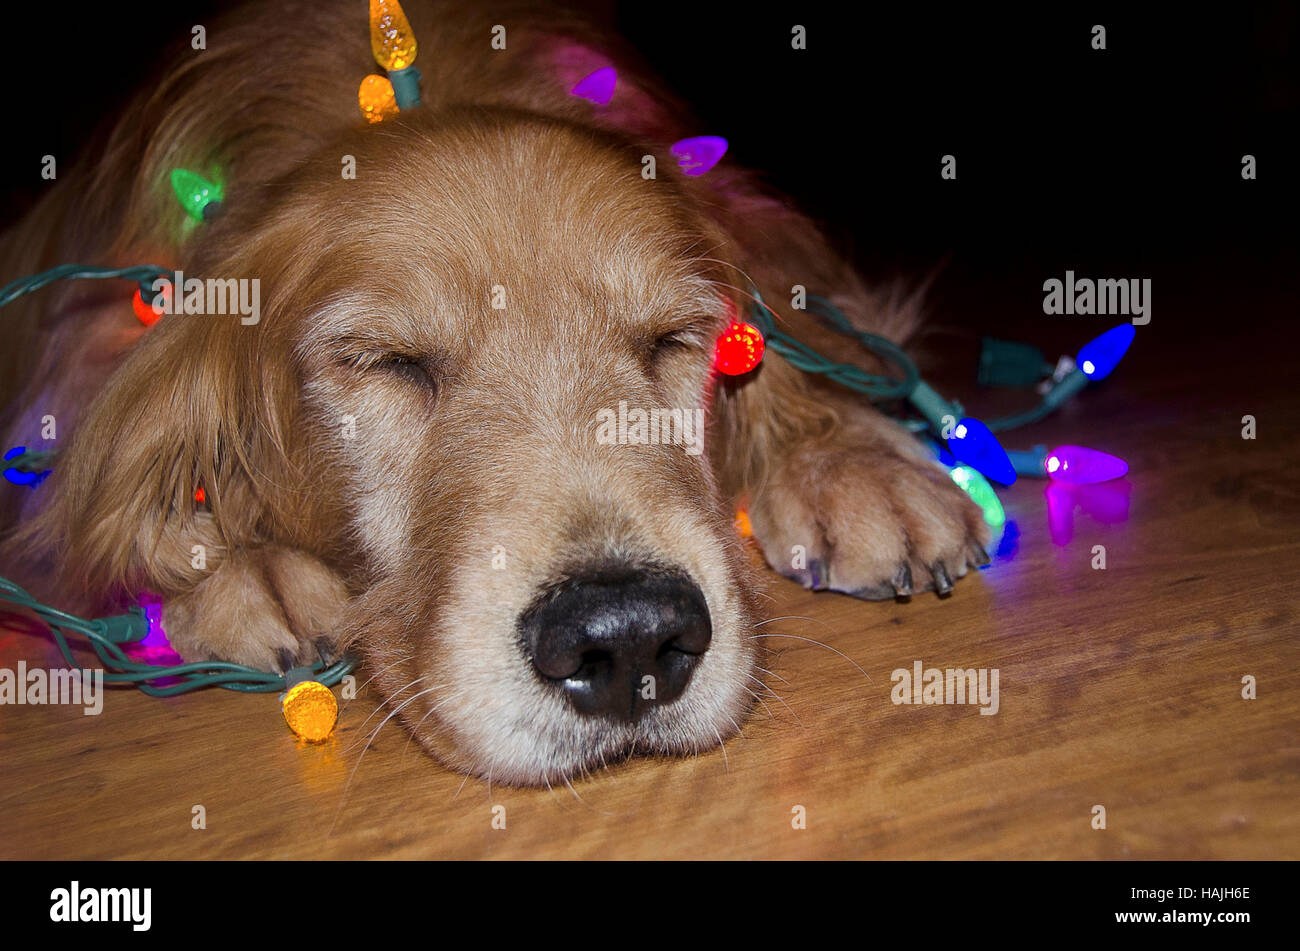 sleeping golden retriever tangled in glowing Christmas lights on wood floor Stock Photo